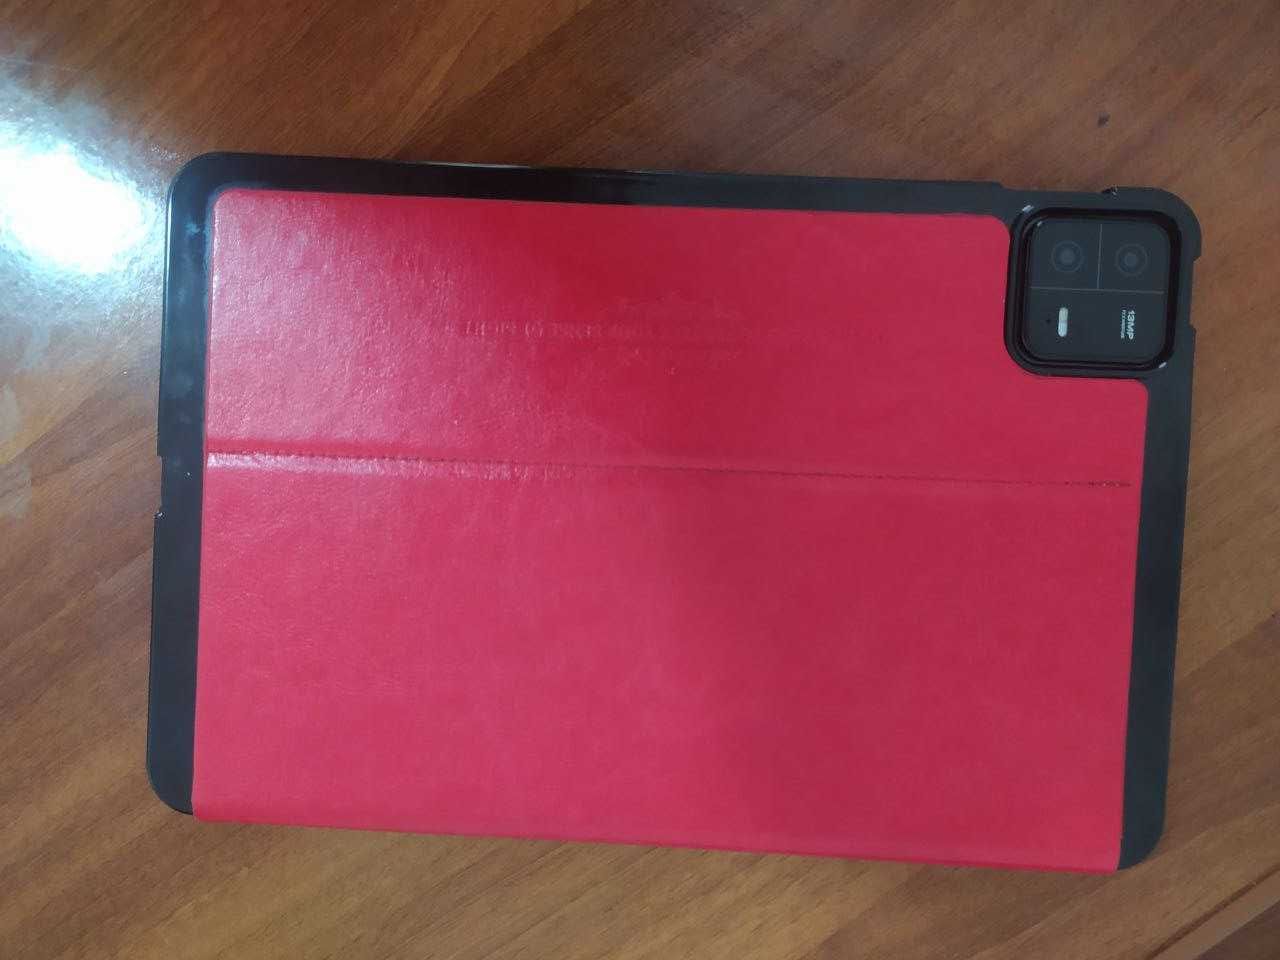 Xiaomi Pad 6 8/256